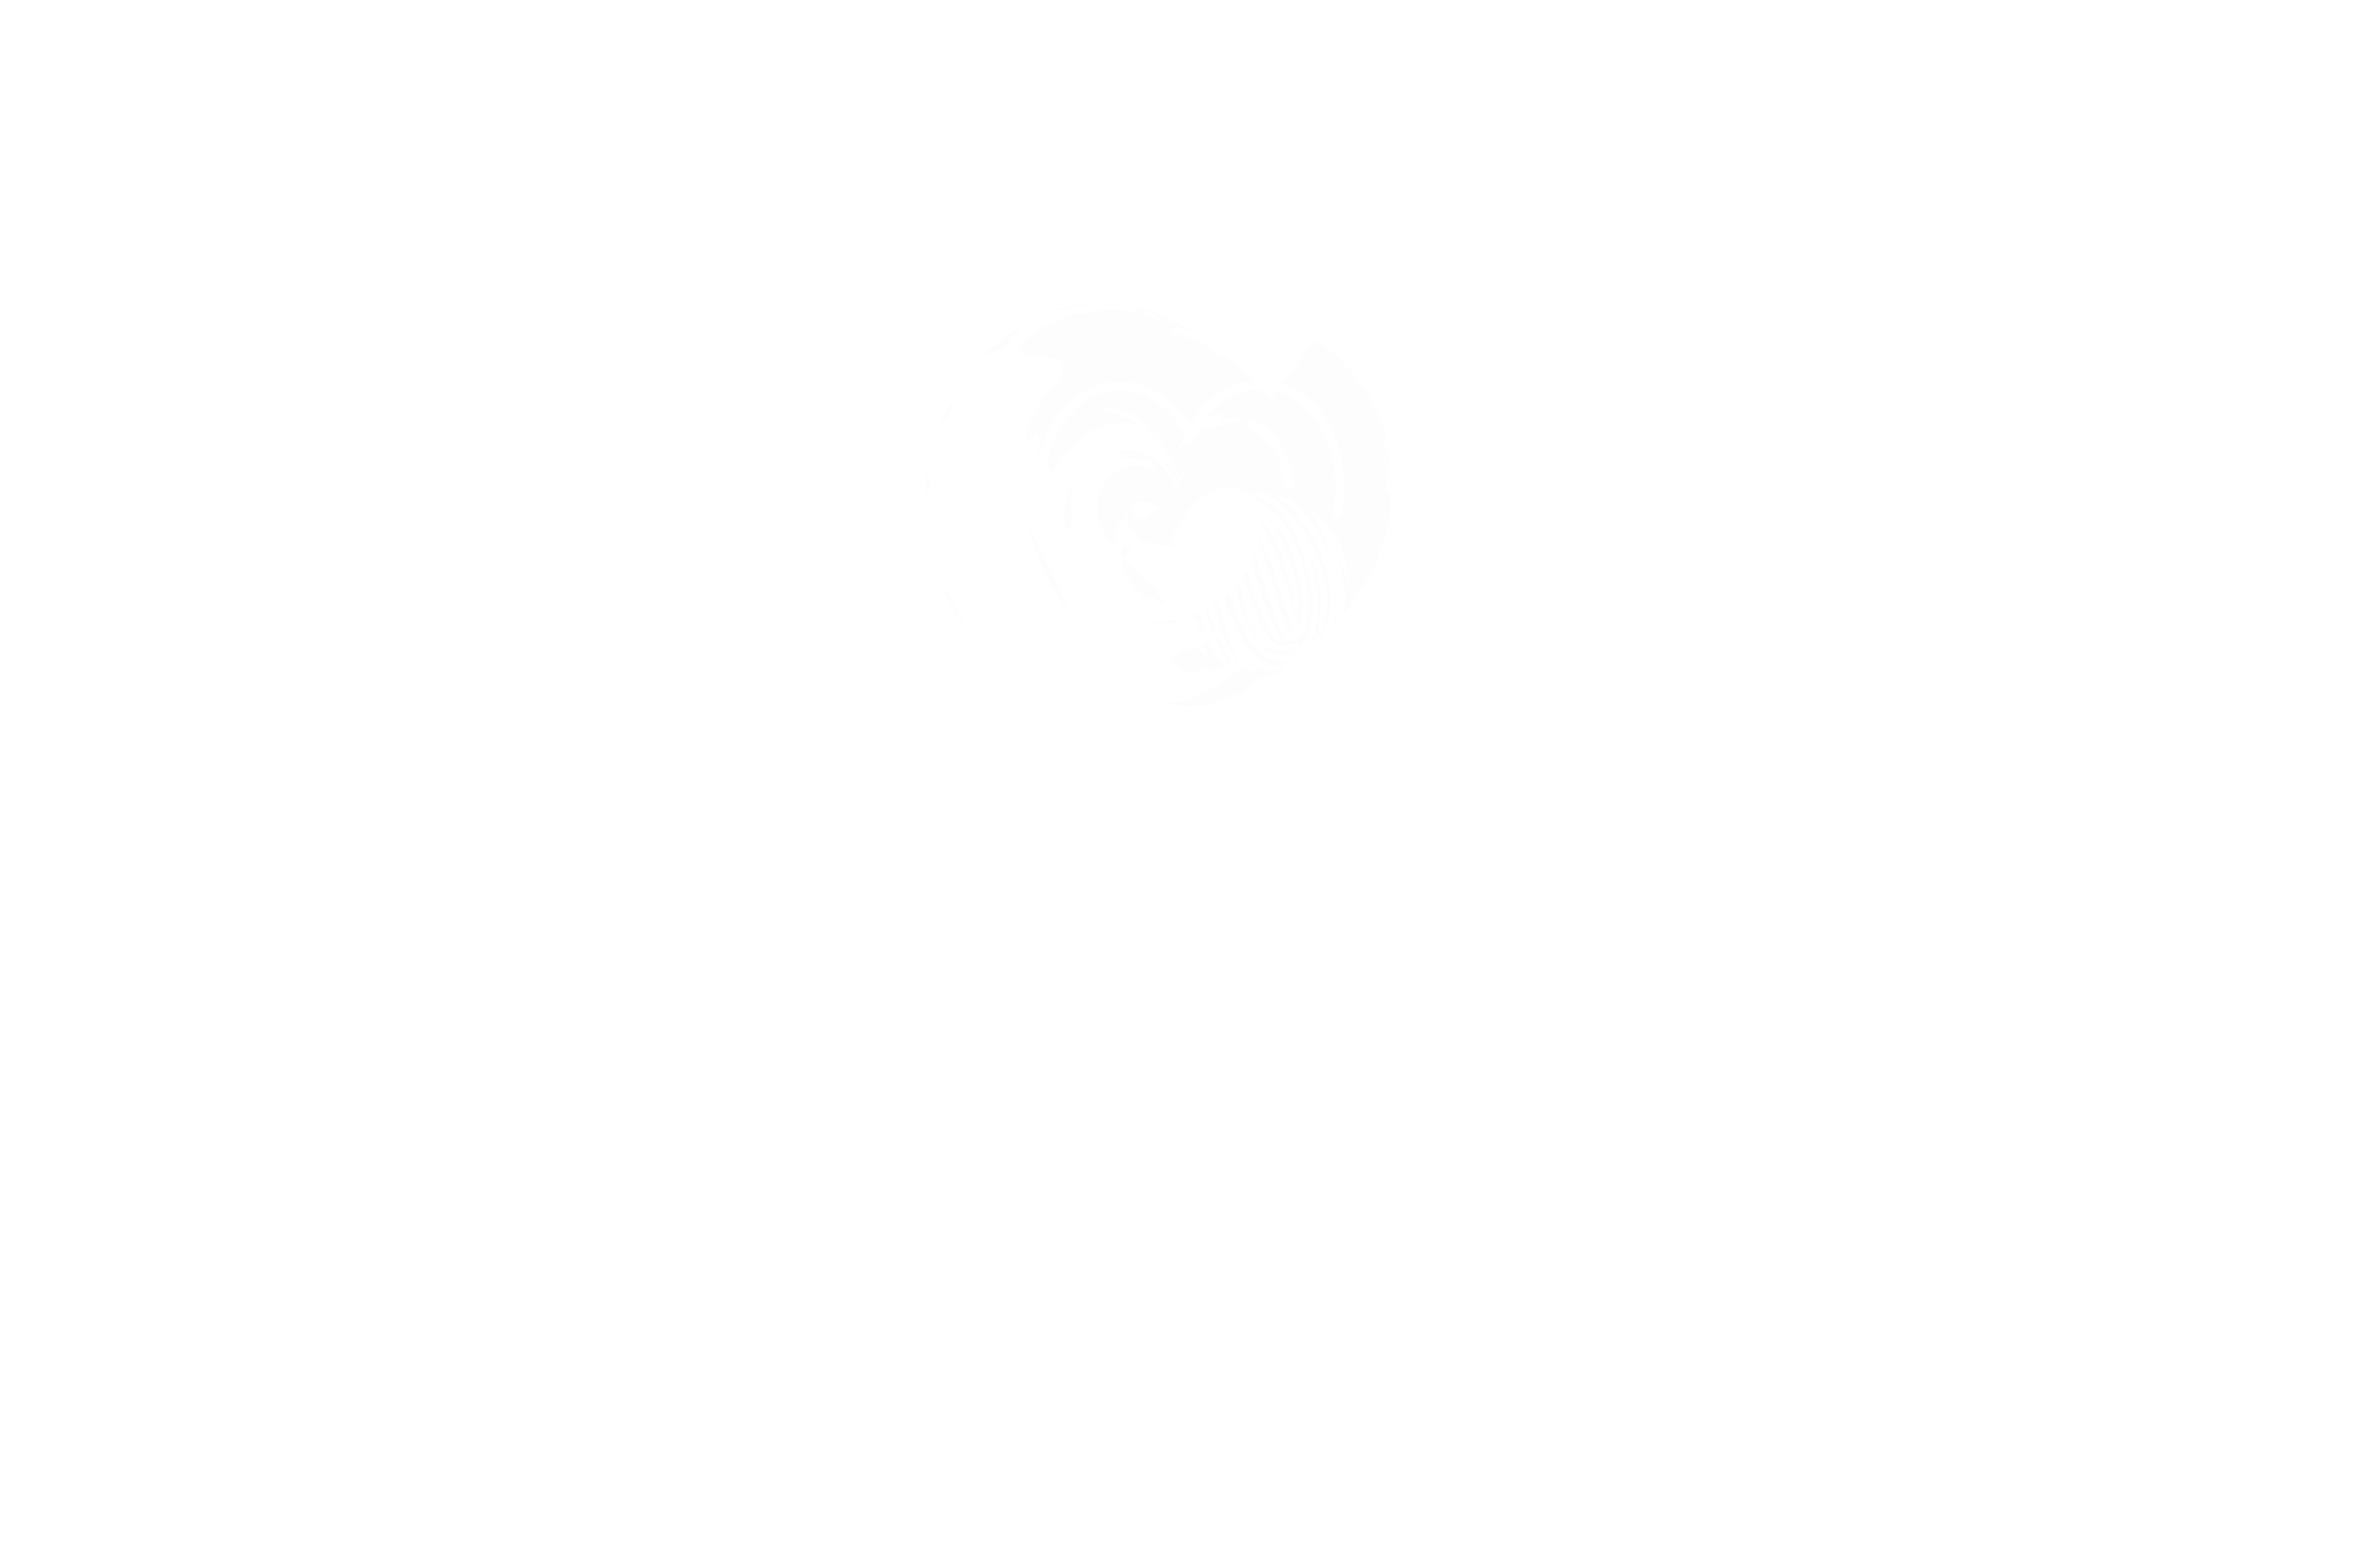 ID Essence Logo 1 WHITE.png